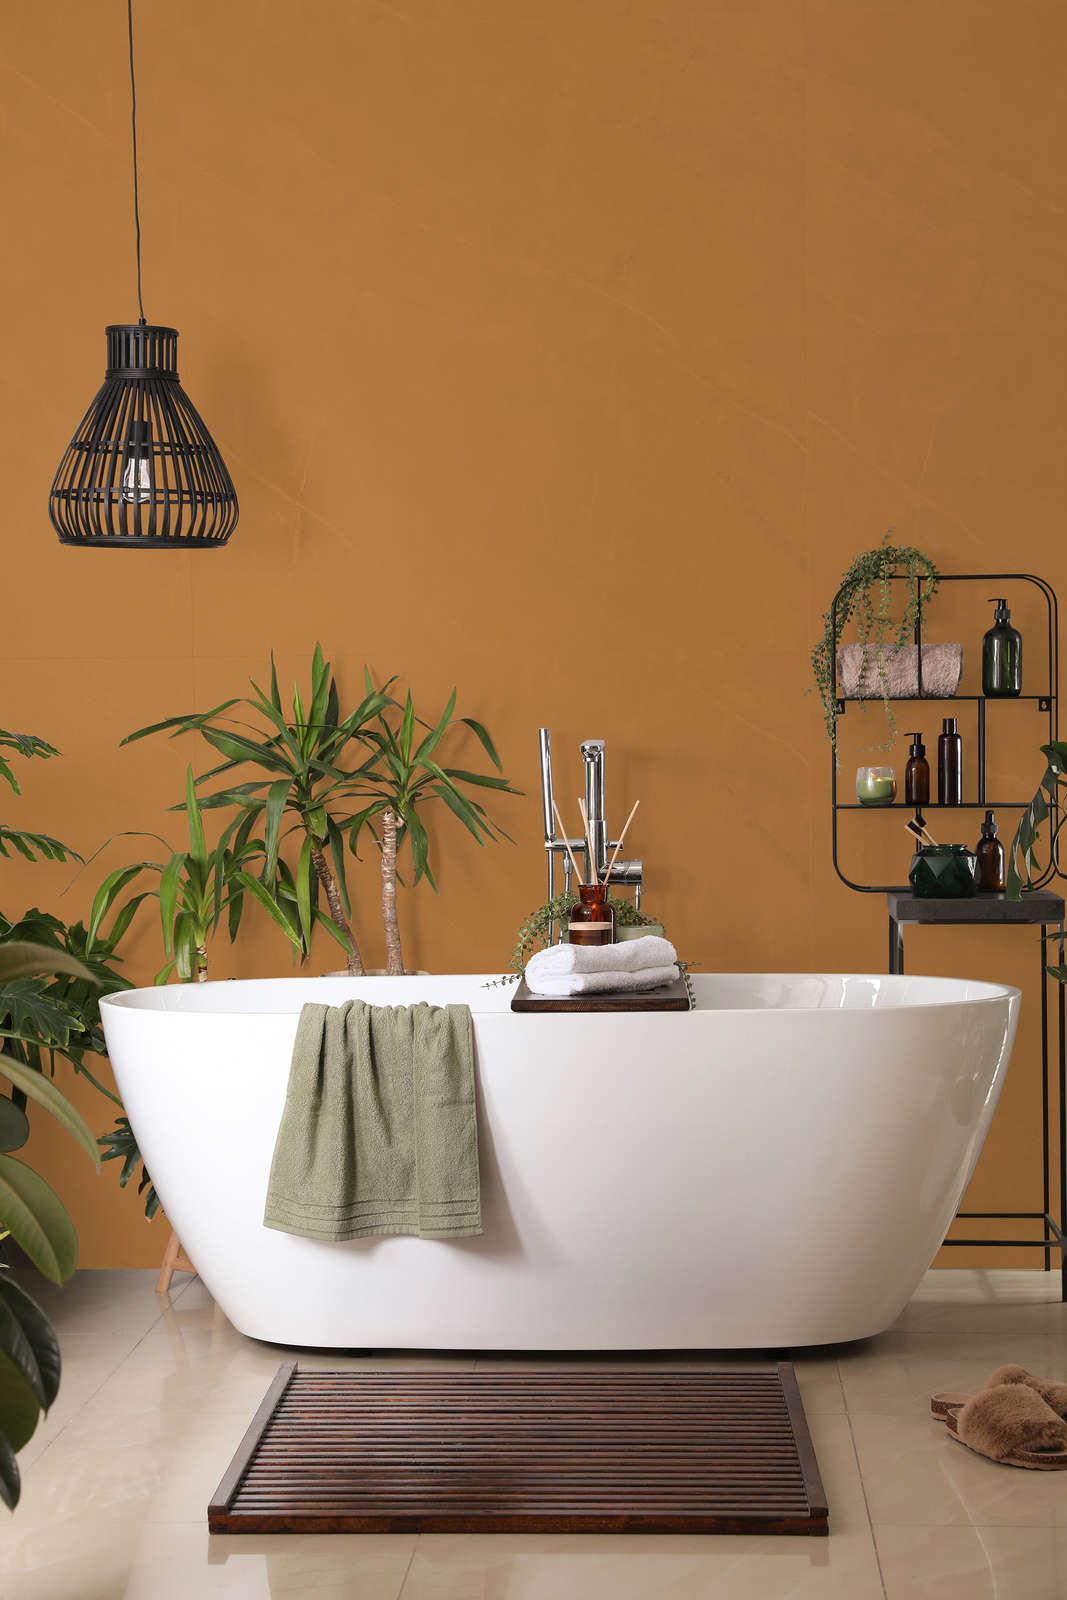             Premium Wall Paint strong light brown »Beige Orange/Sassy Saffron« NW814 – 1 litre
        